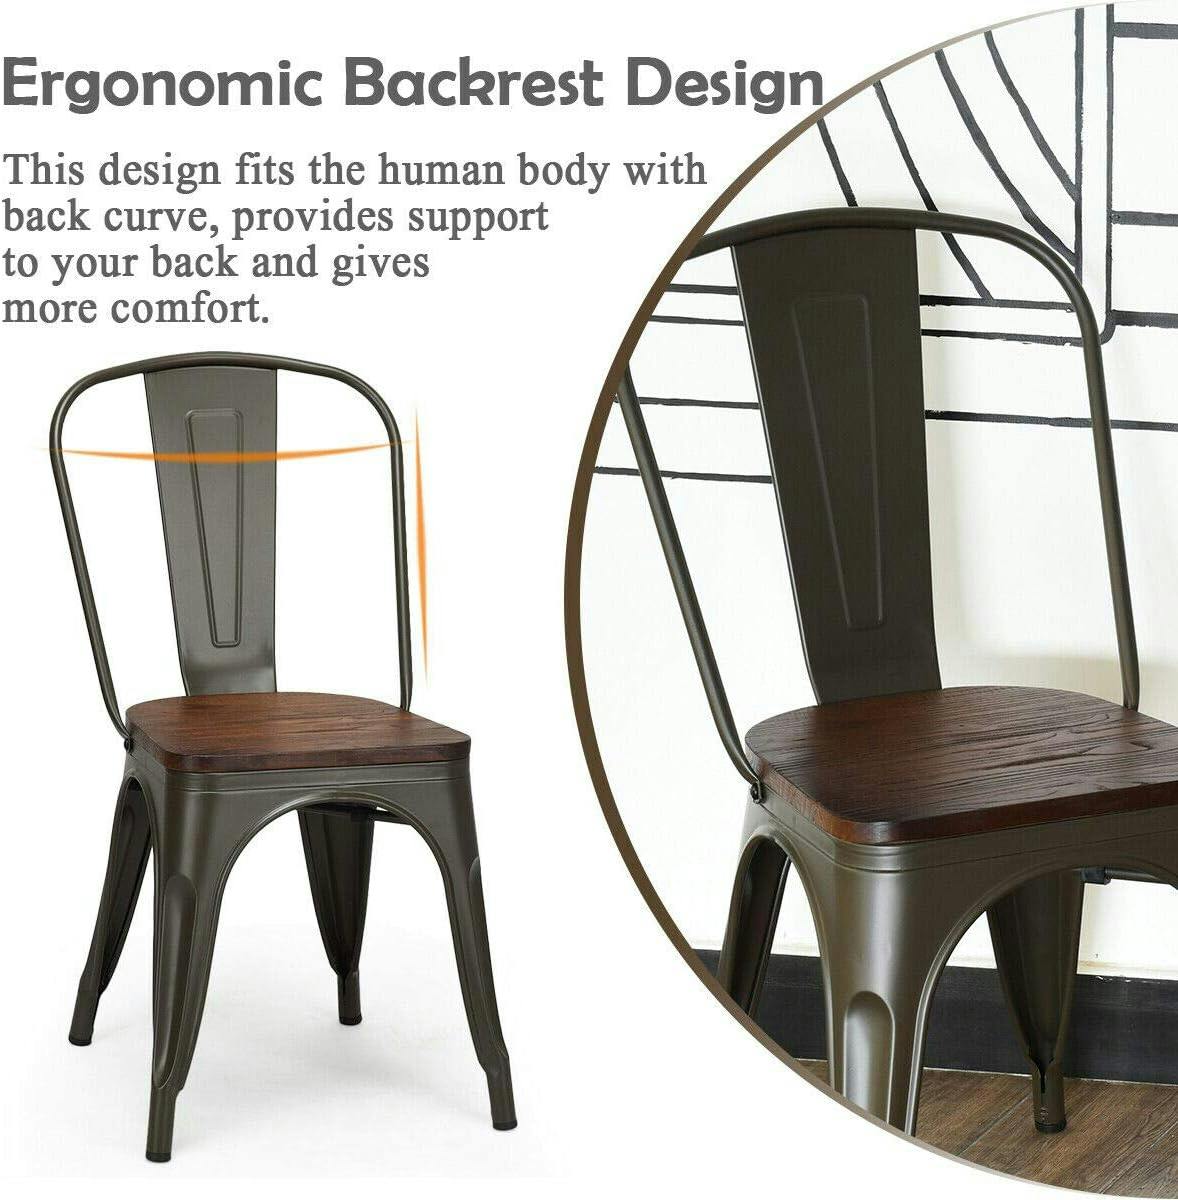 Vintage Elmwood Seat Metal High-Back Side Chair, Set of 4